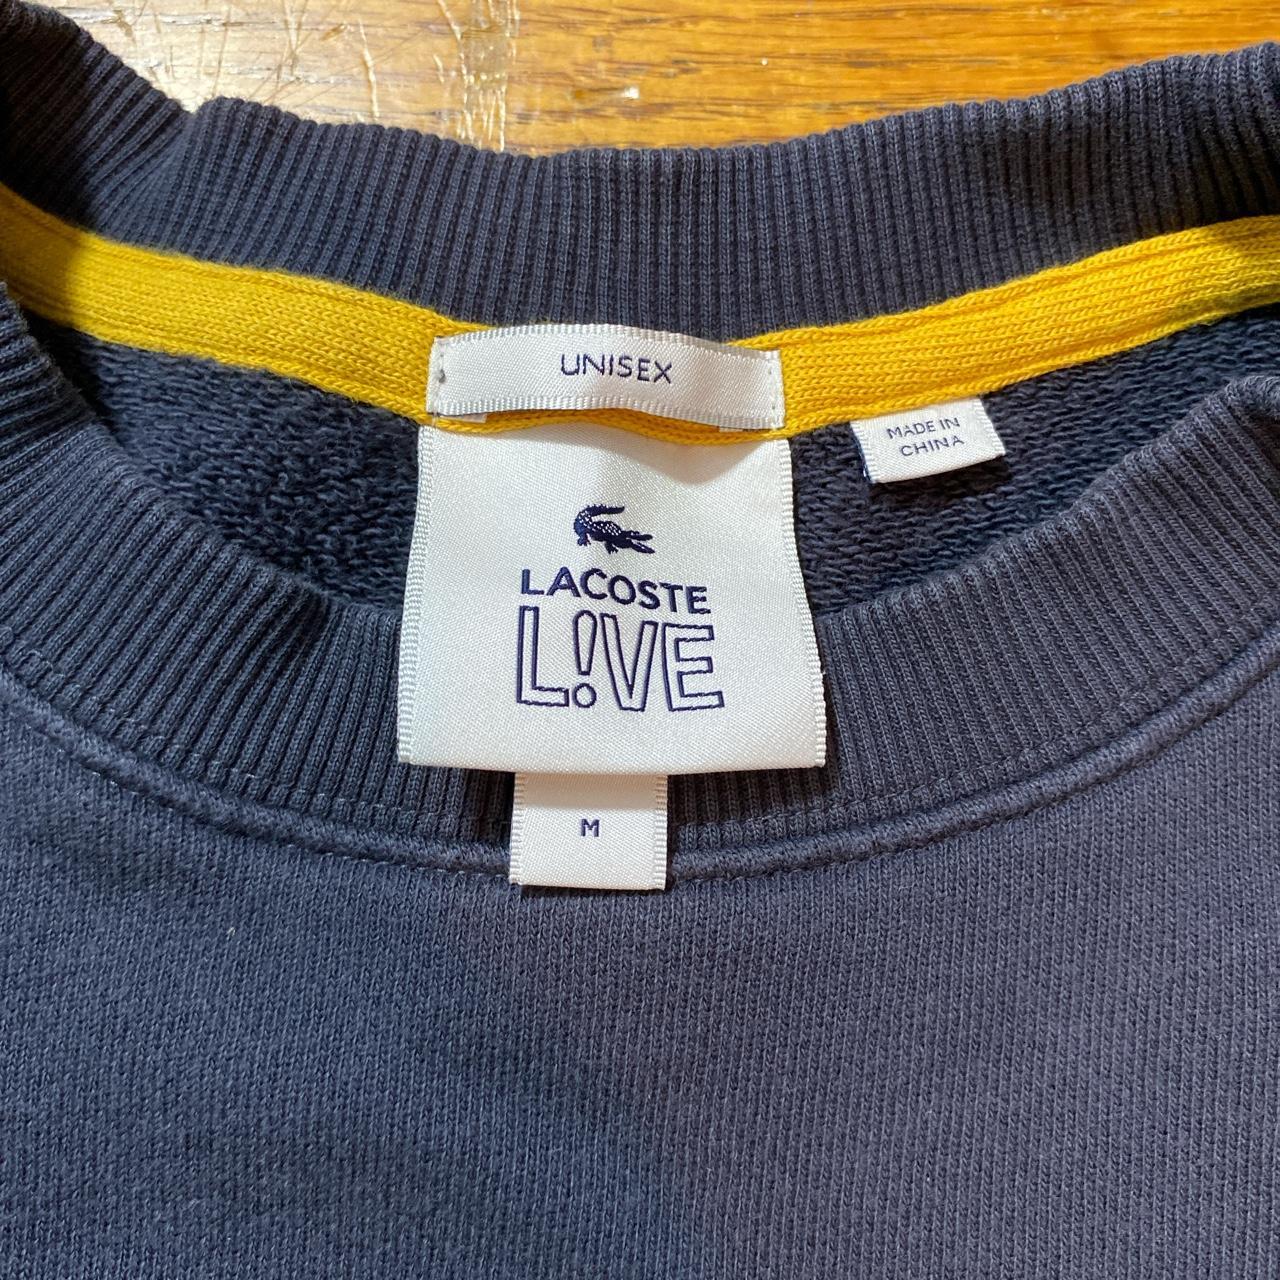 Lacoste Live Men's Grey and Yellow Sweatshirt (2)